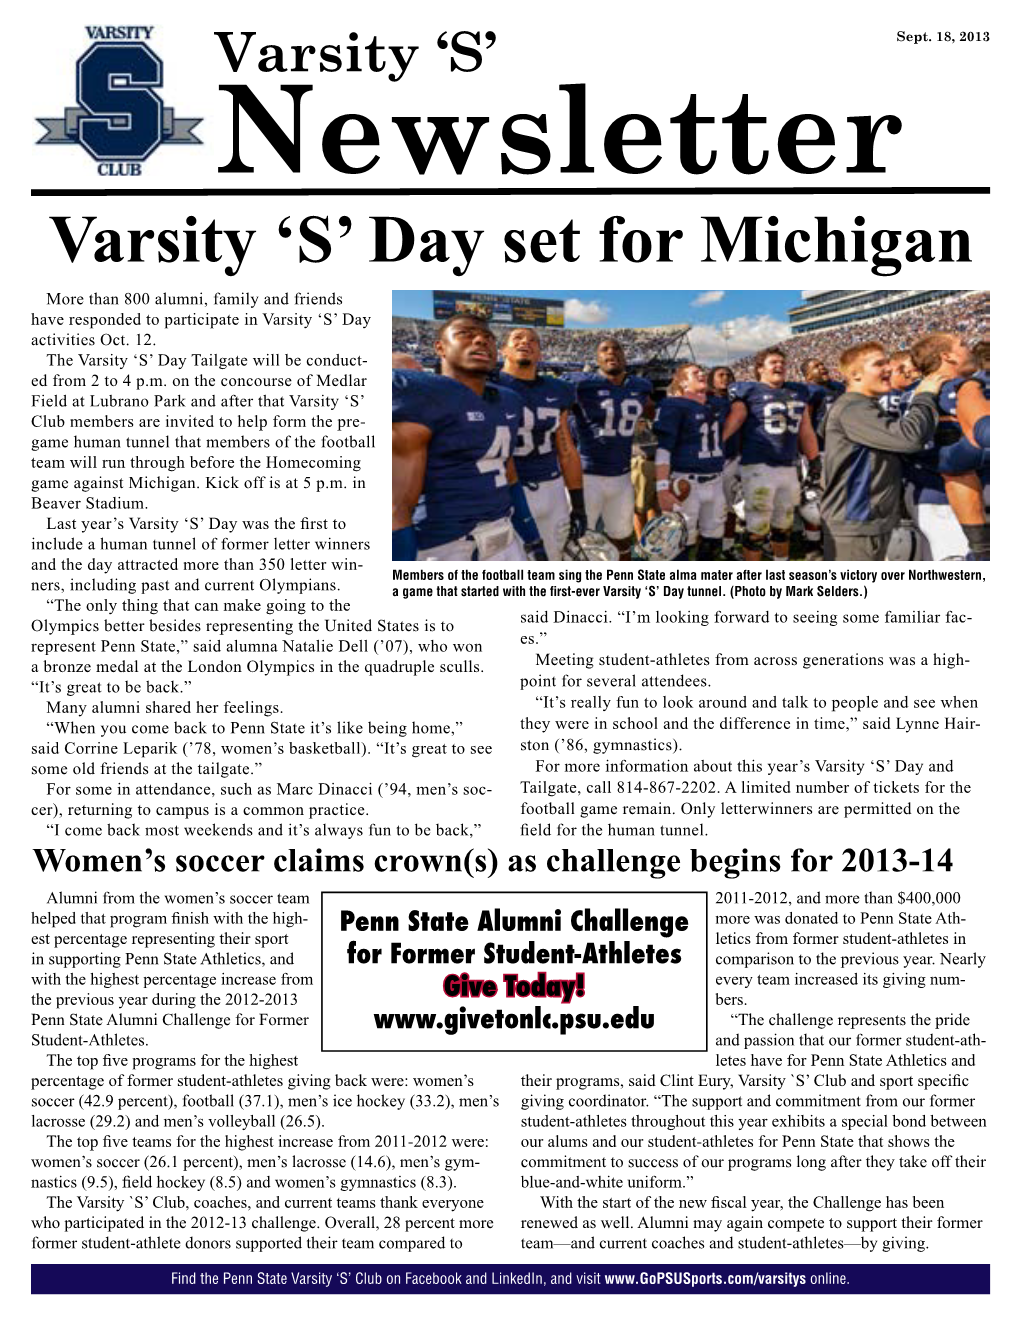 Varsity 'S' Day Set for Michigan